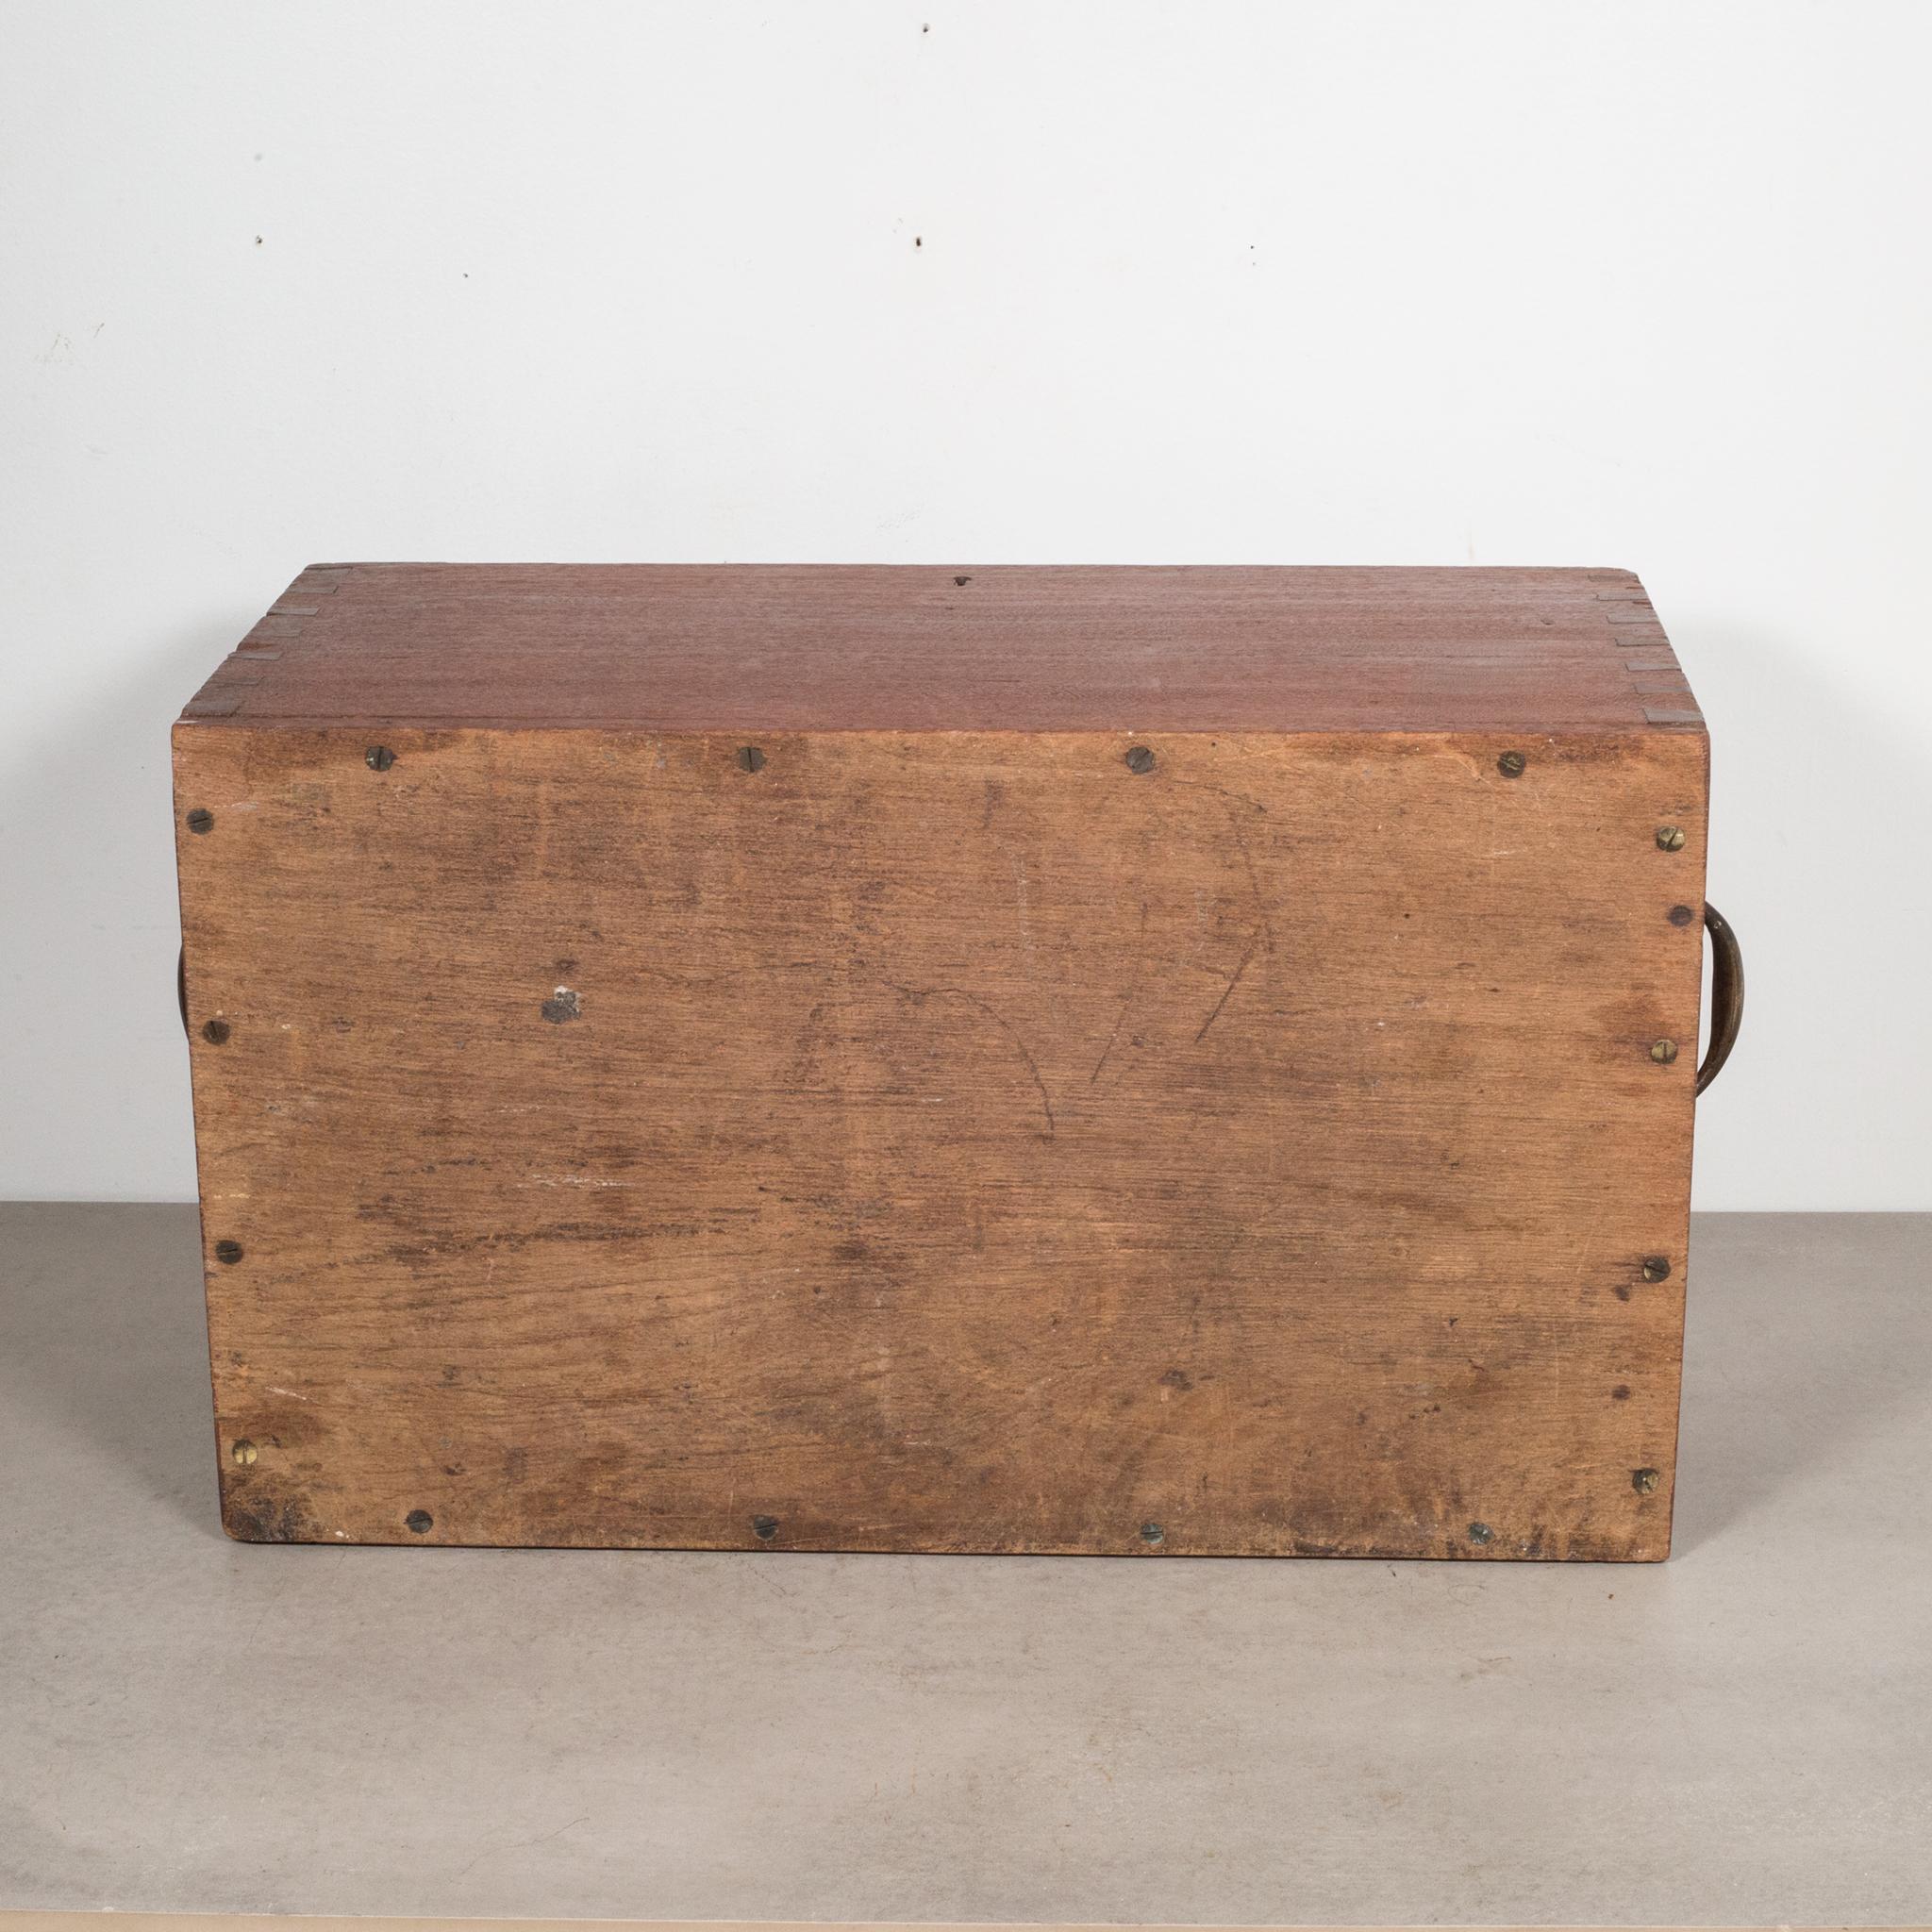 19th Century Large Handmade Wood and Brass Box c.1880-1920